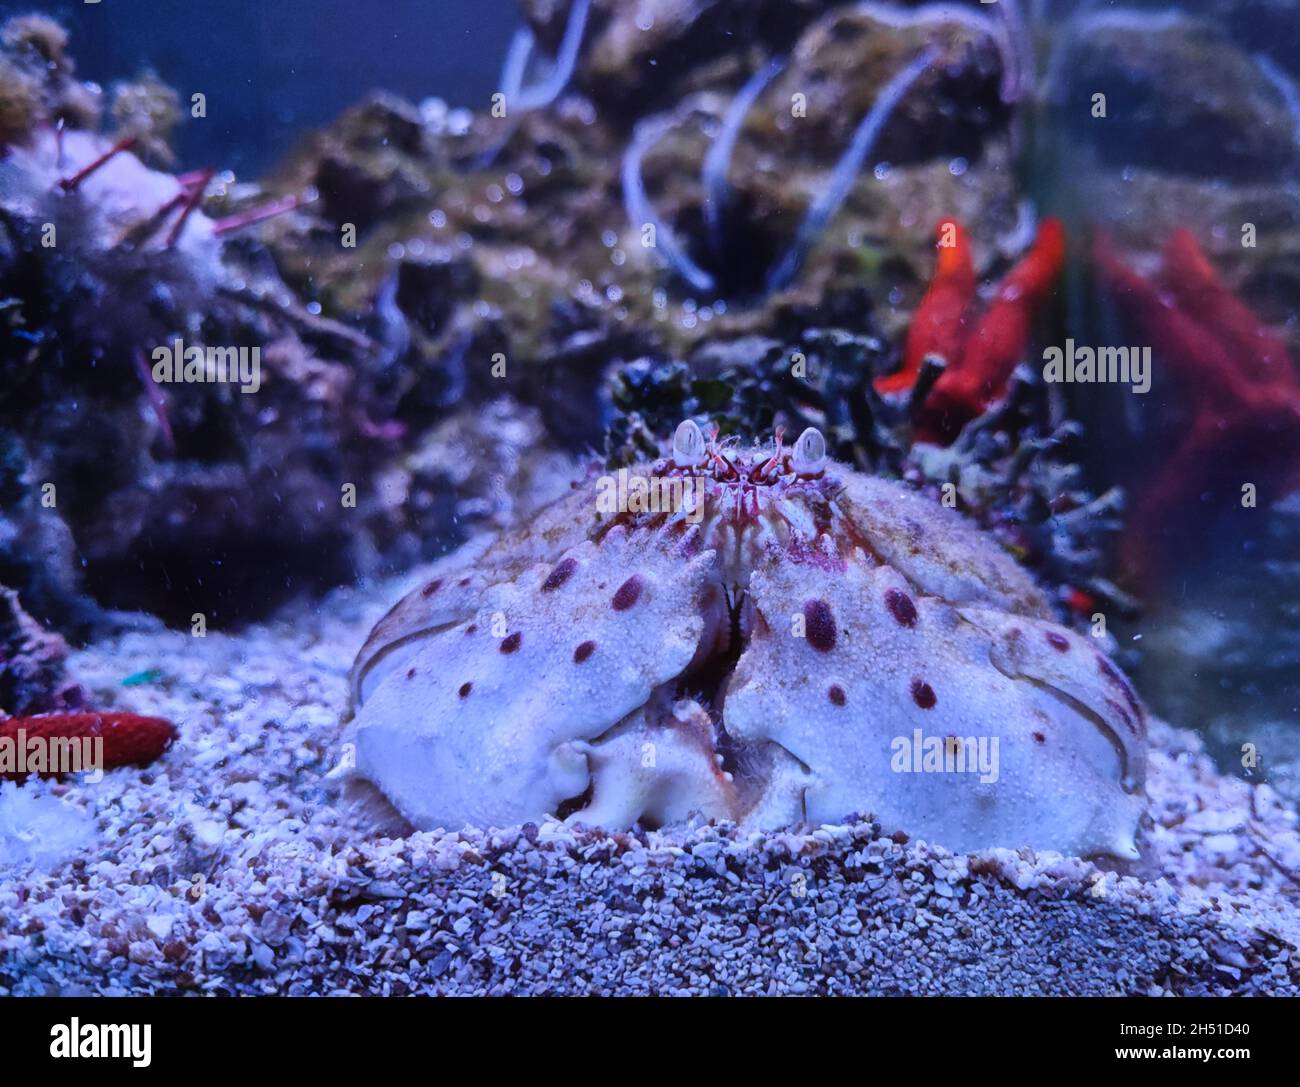 Closeup shot of Calappa granulata crab on the sand in the aquarium water Stock Photo